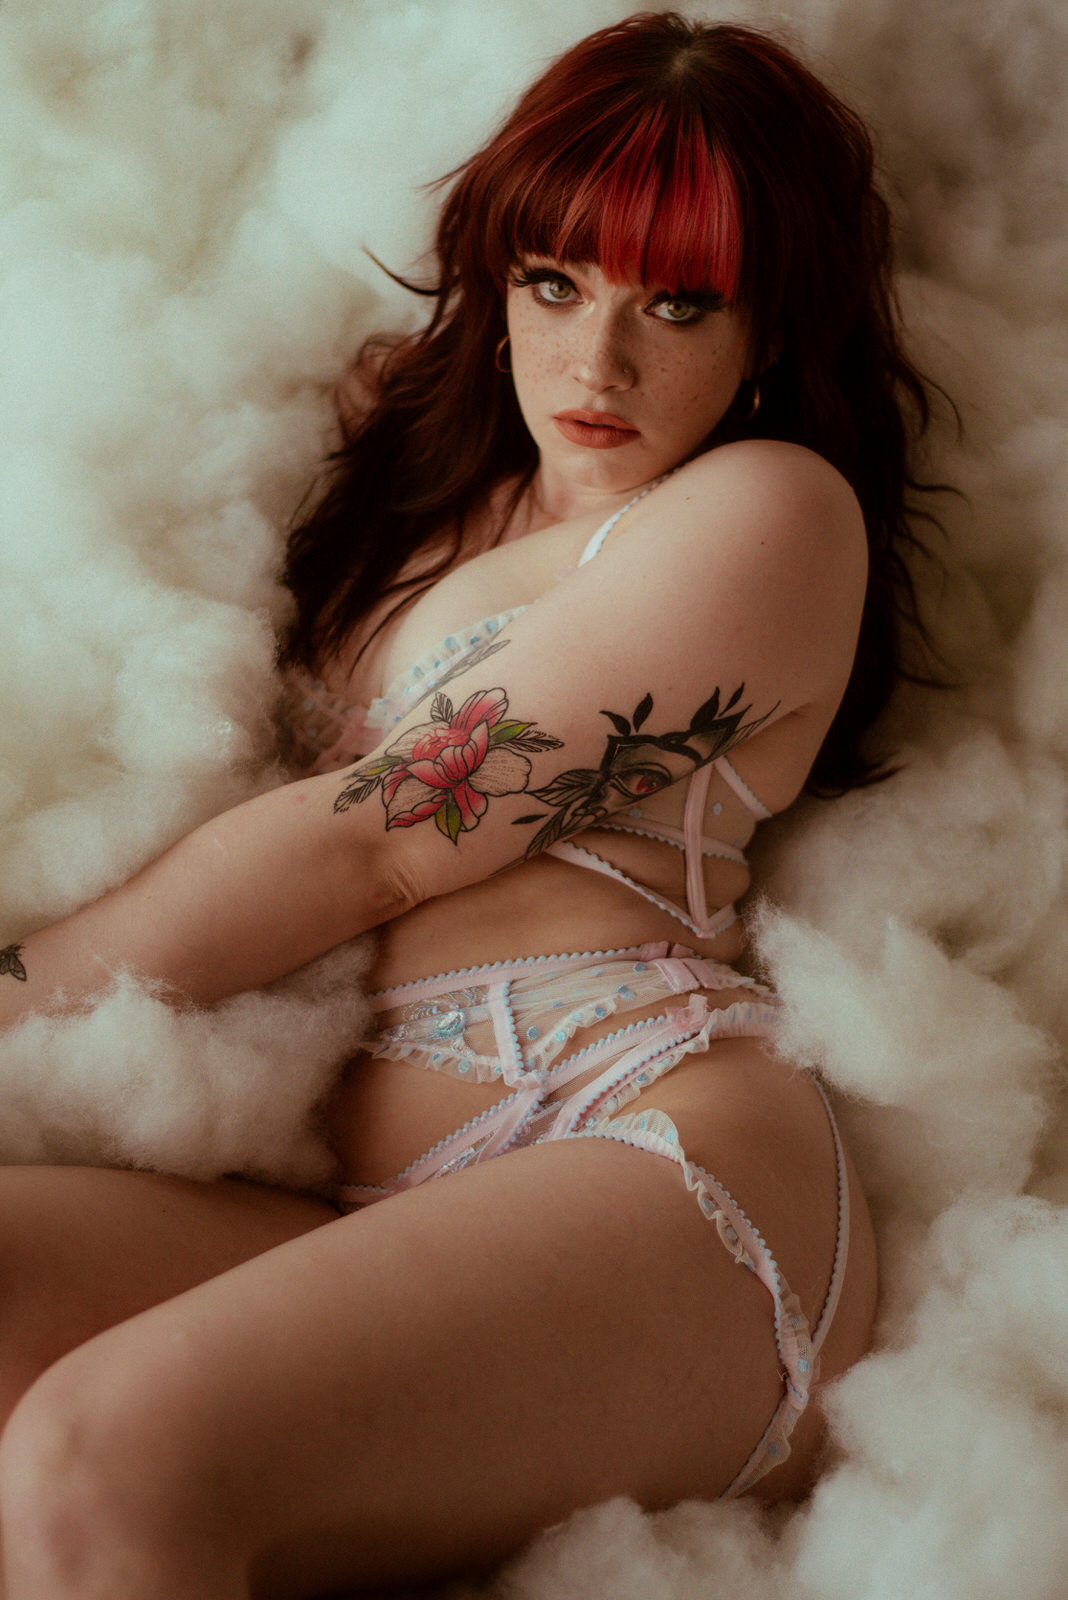 Beautiful woman with tattoos posing in lingerie in Dallas boudoir studio.